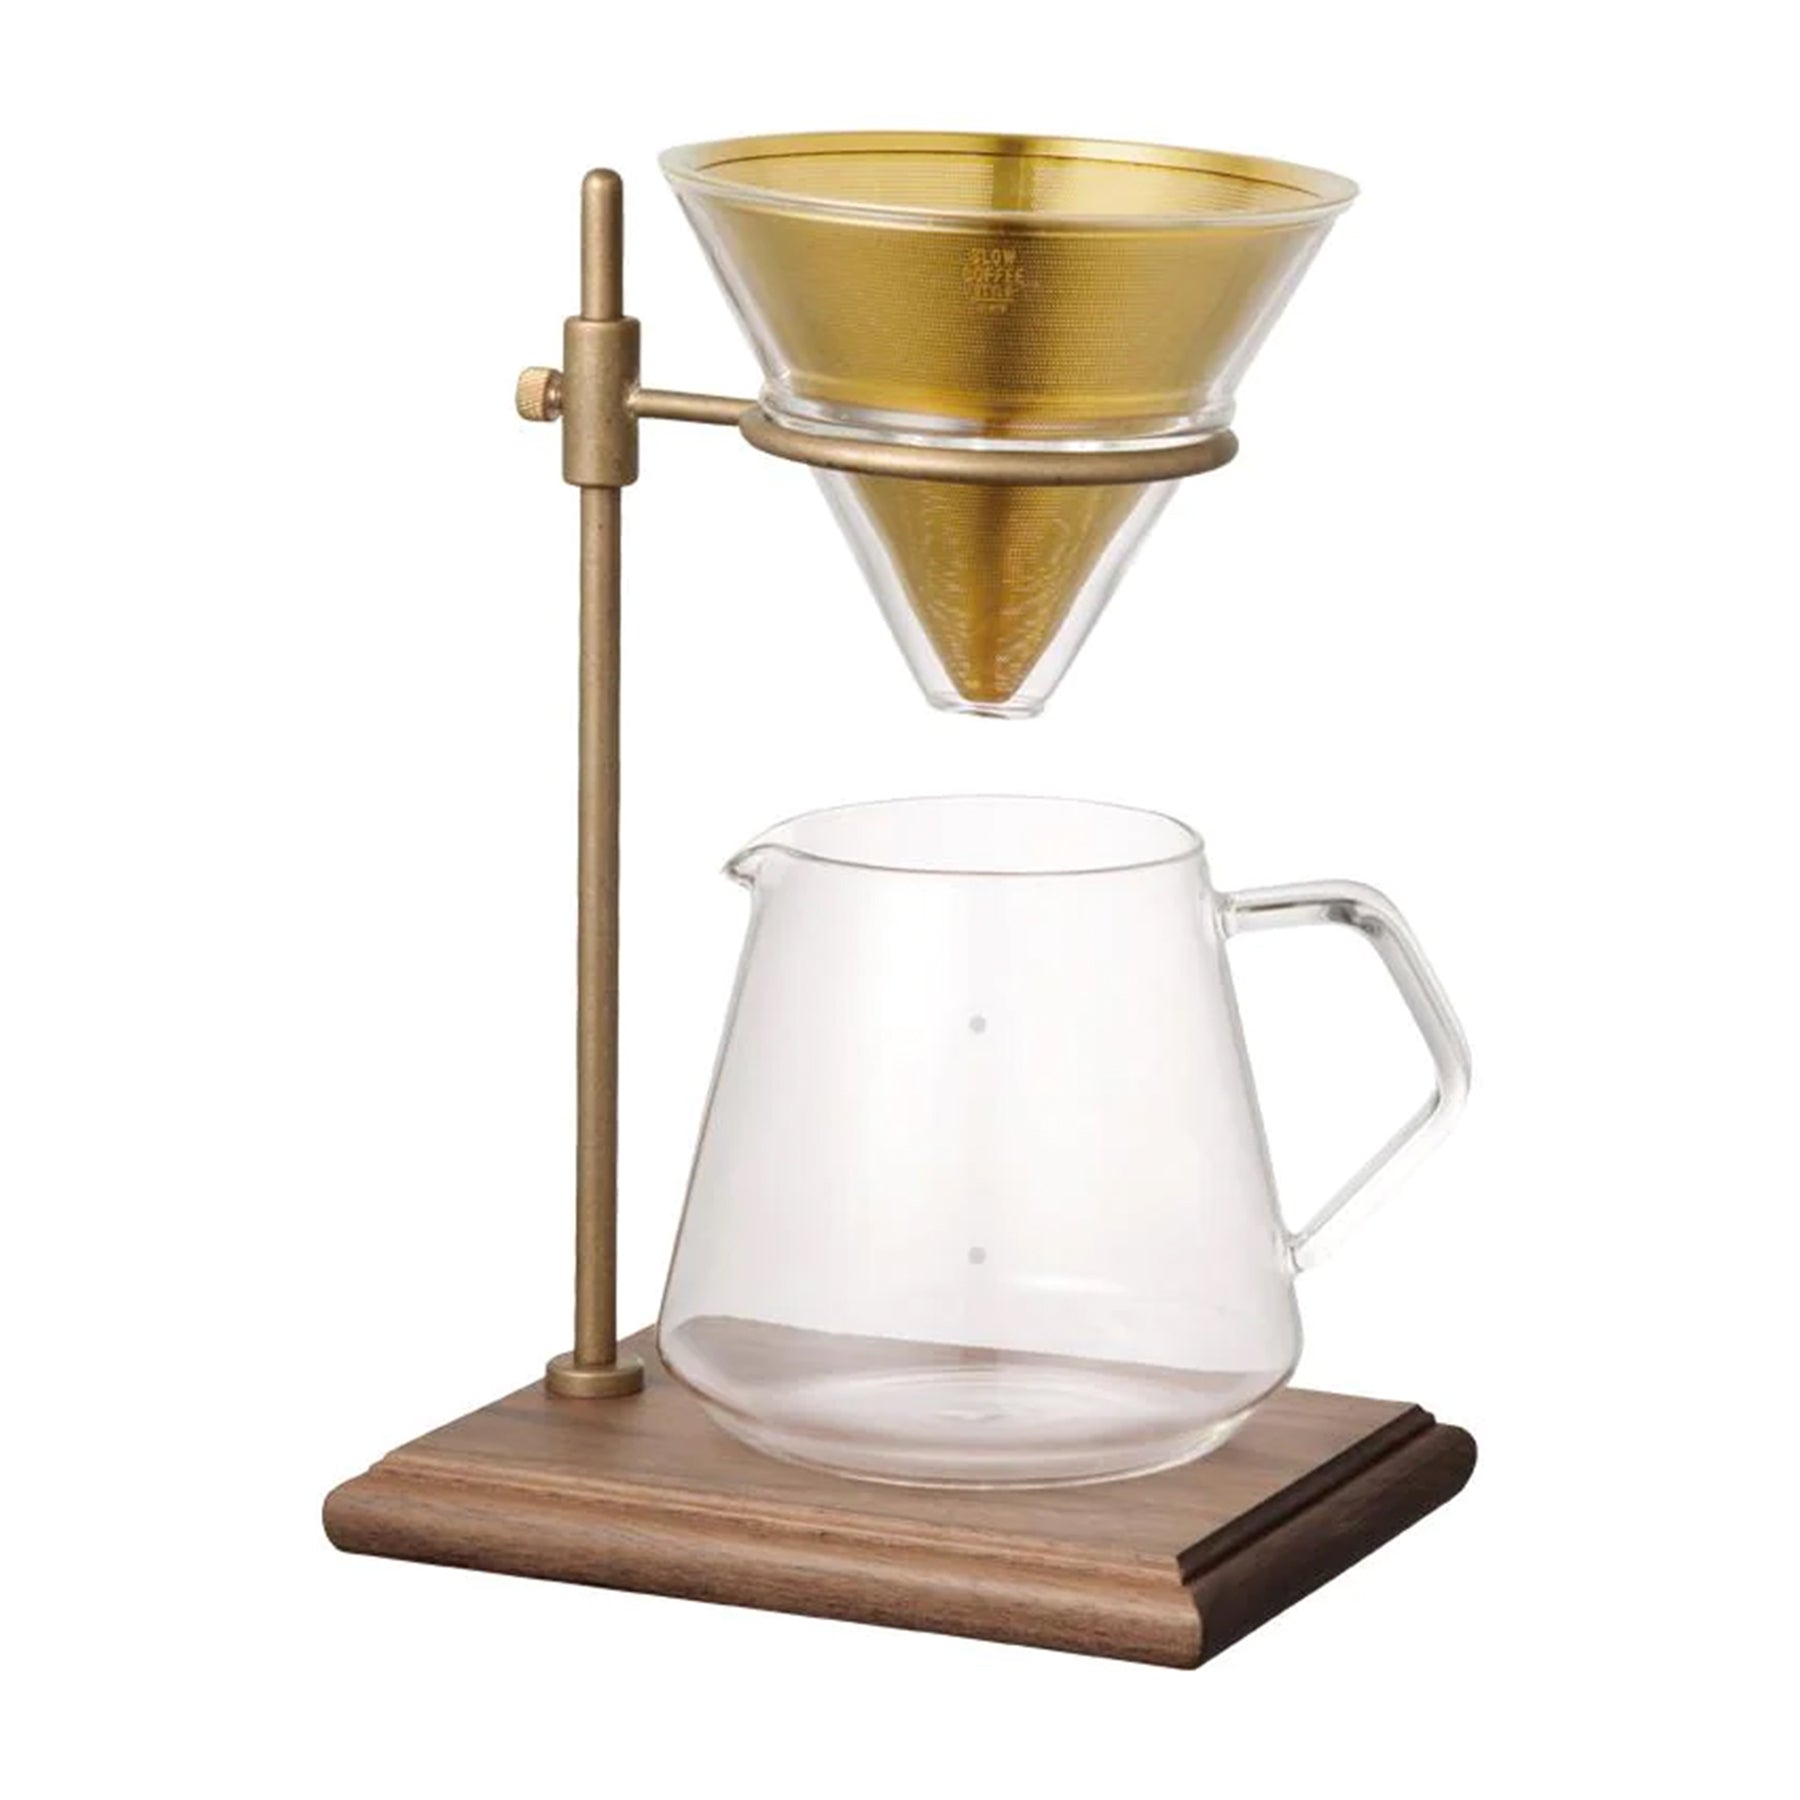 SCS-S02 Brewer Stand Set, 4 Cups - مجموعة تحضير قهوة مع حامل لكوب تحضير القهوة